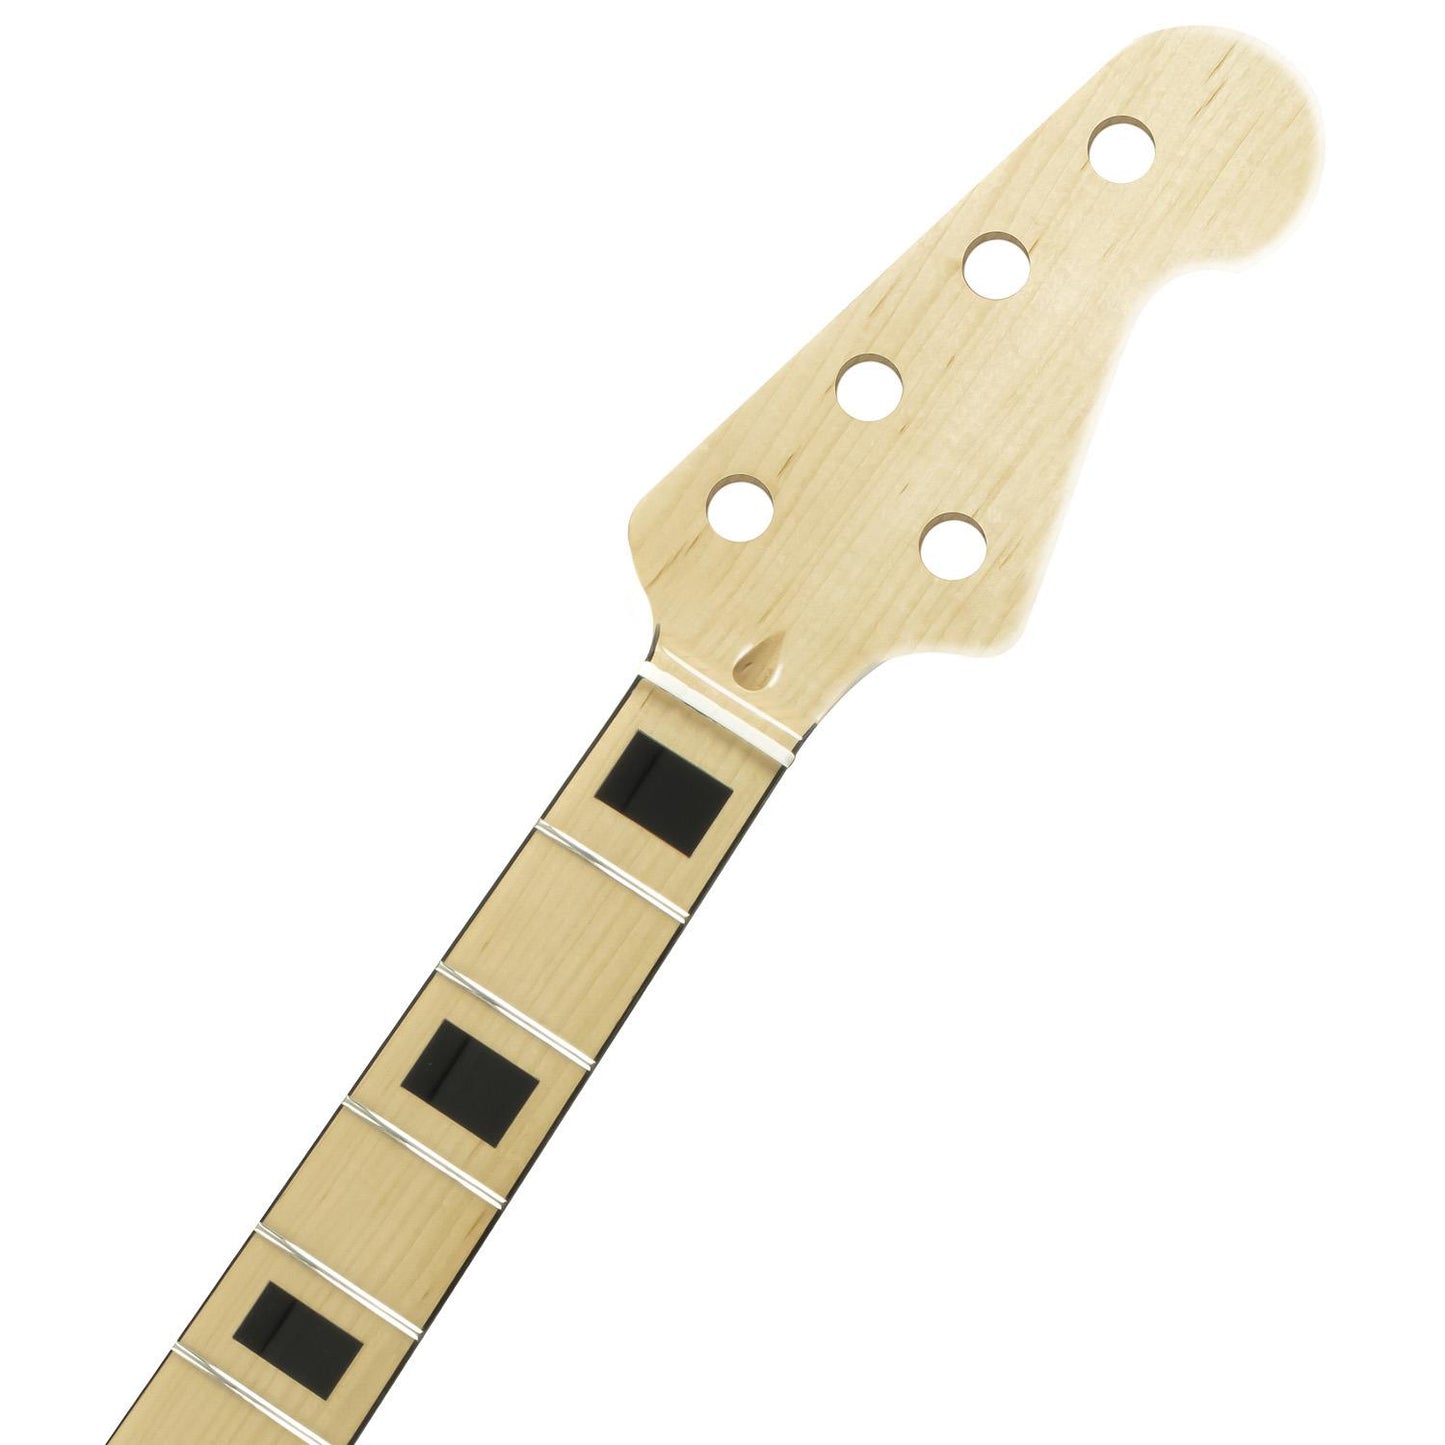 5 String Jazz Bass Compatible Neck  JB08